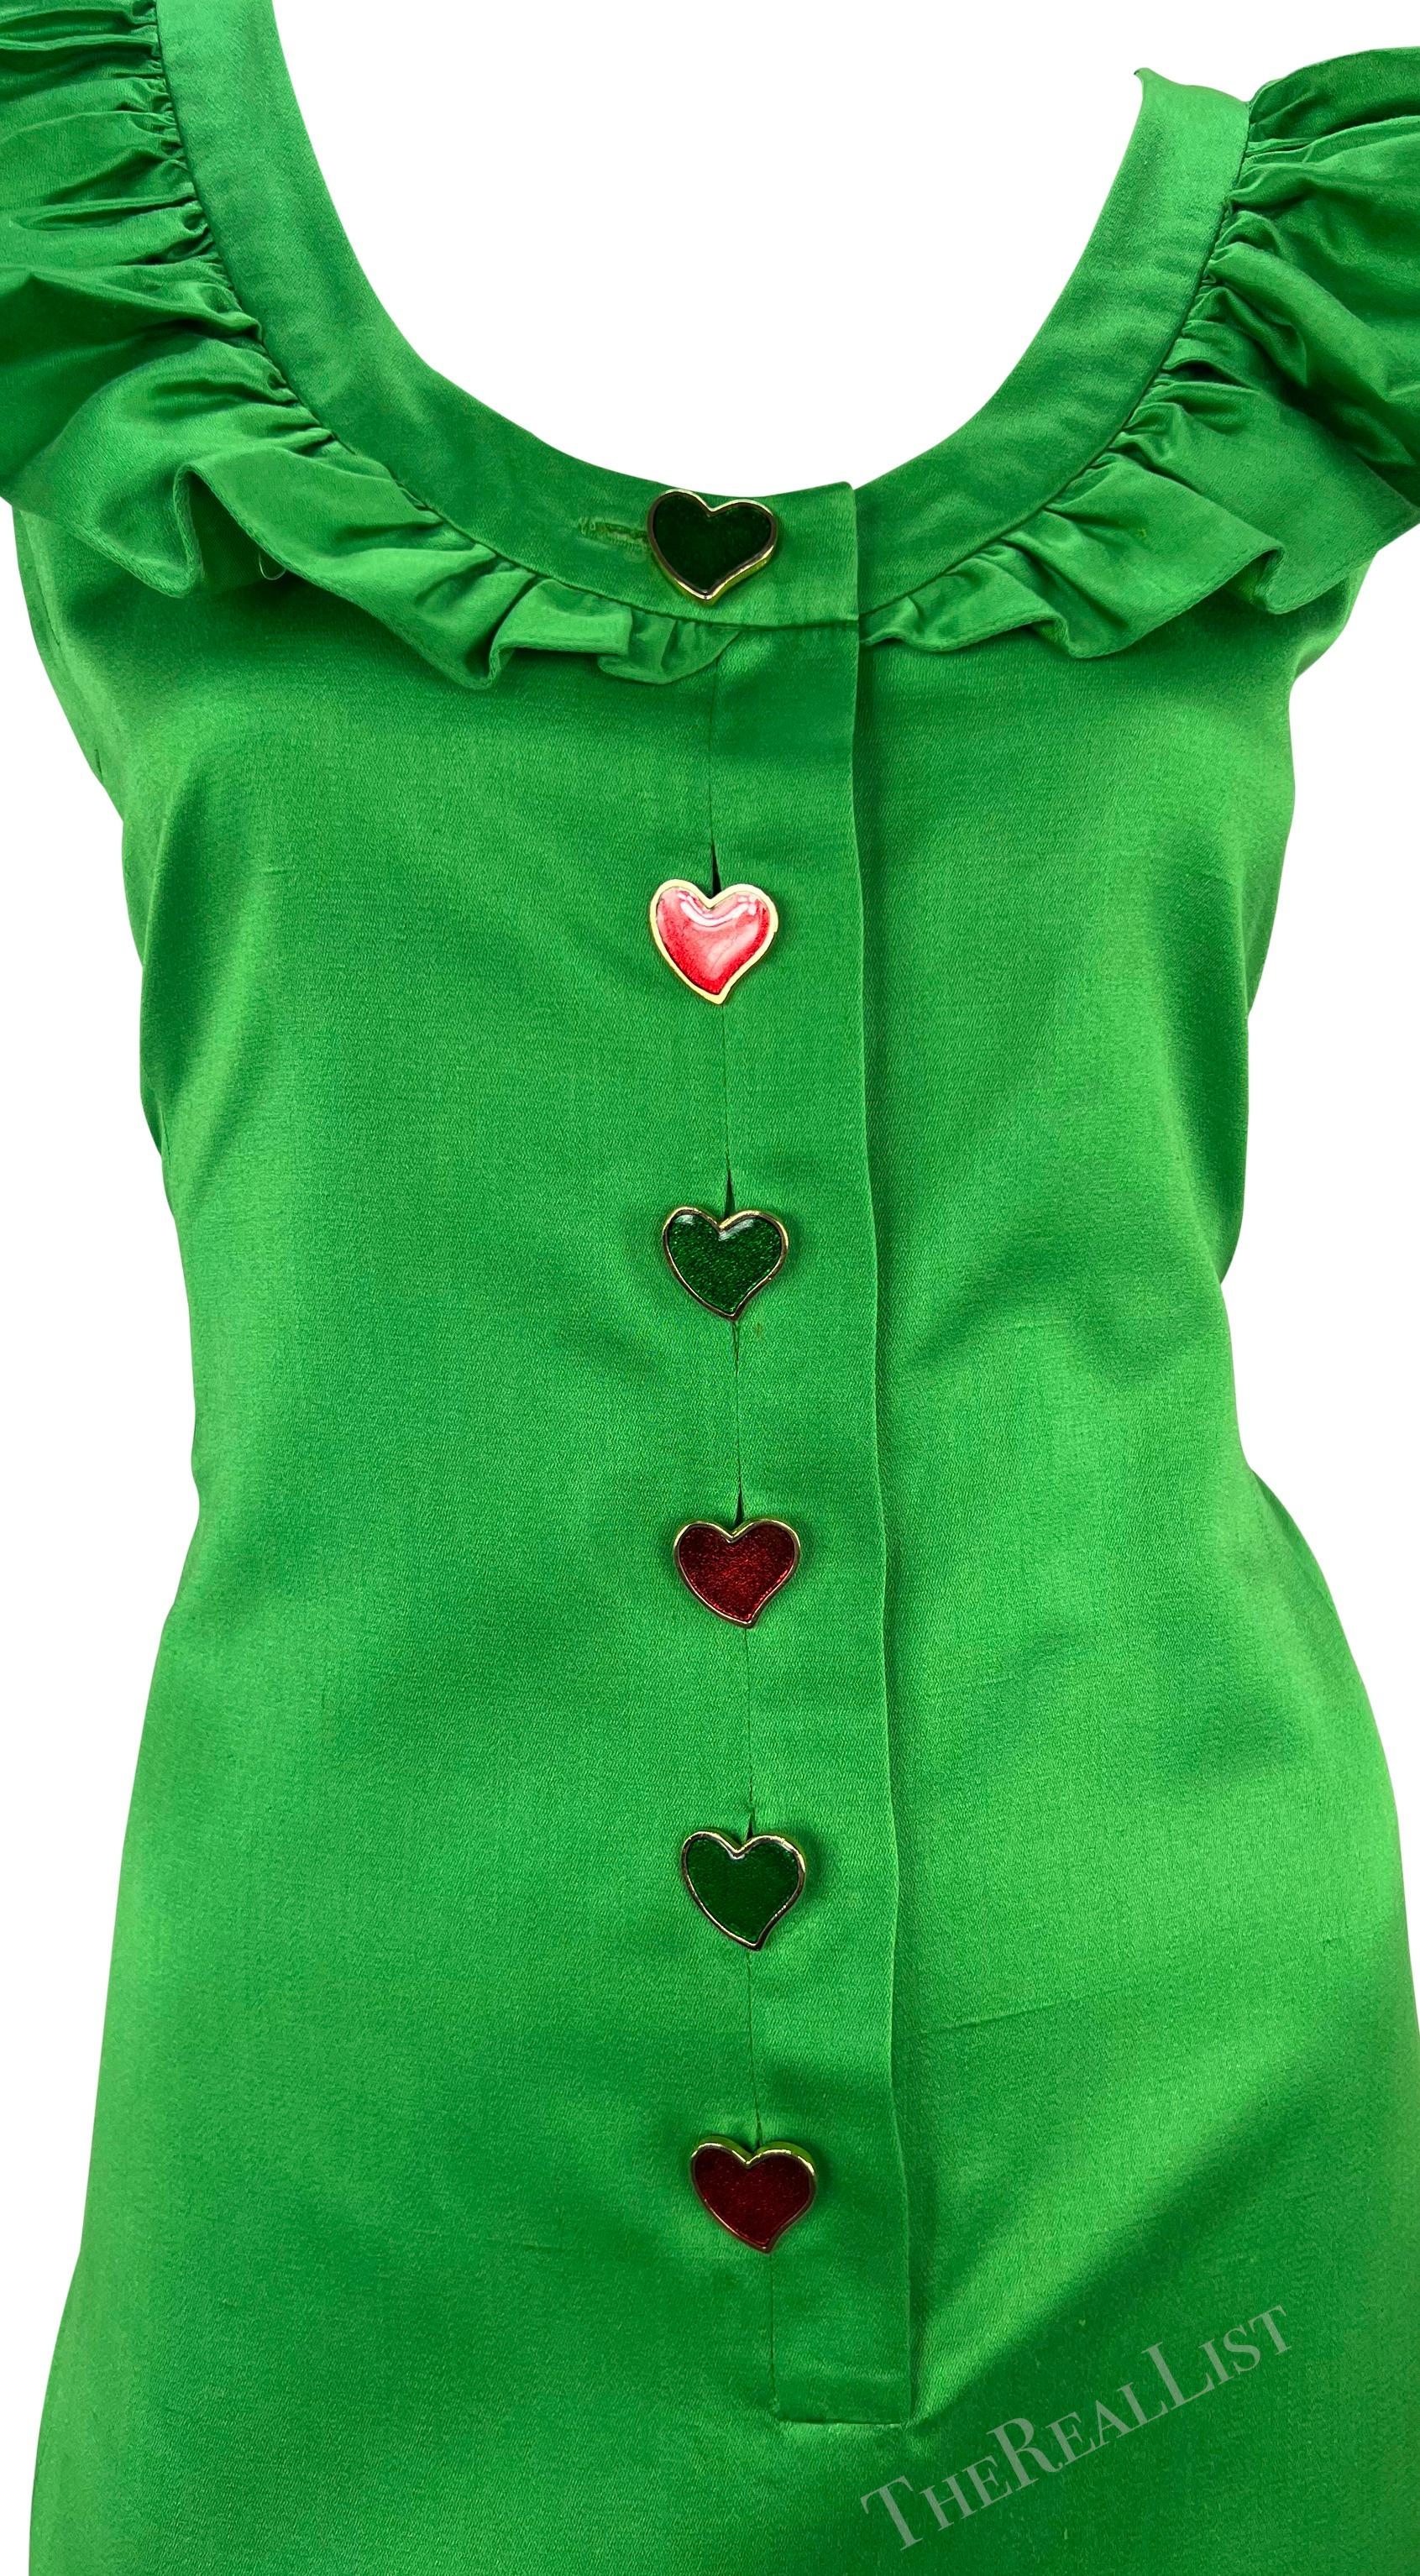 Women's S/S 1992 Yves Saint Laurent Runway Ad Bright Green Ruffle Heart Button Dress For Sale